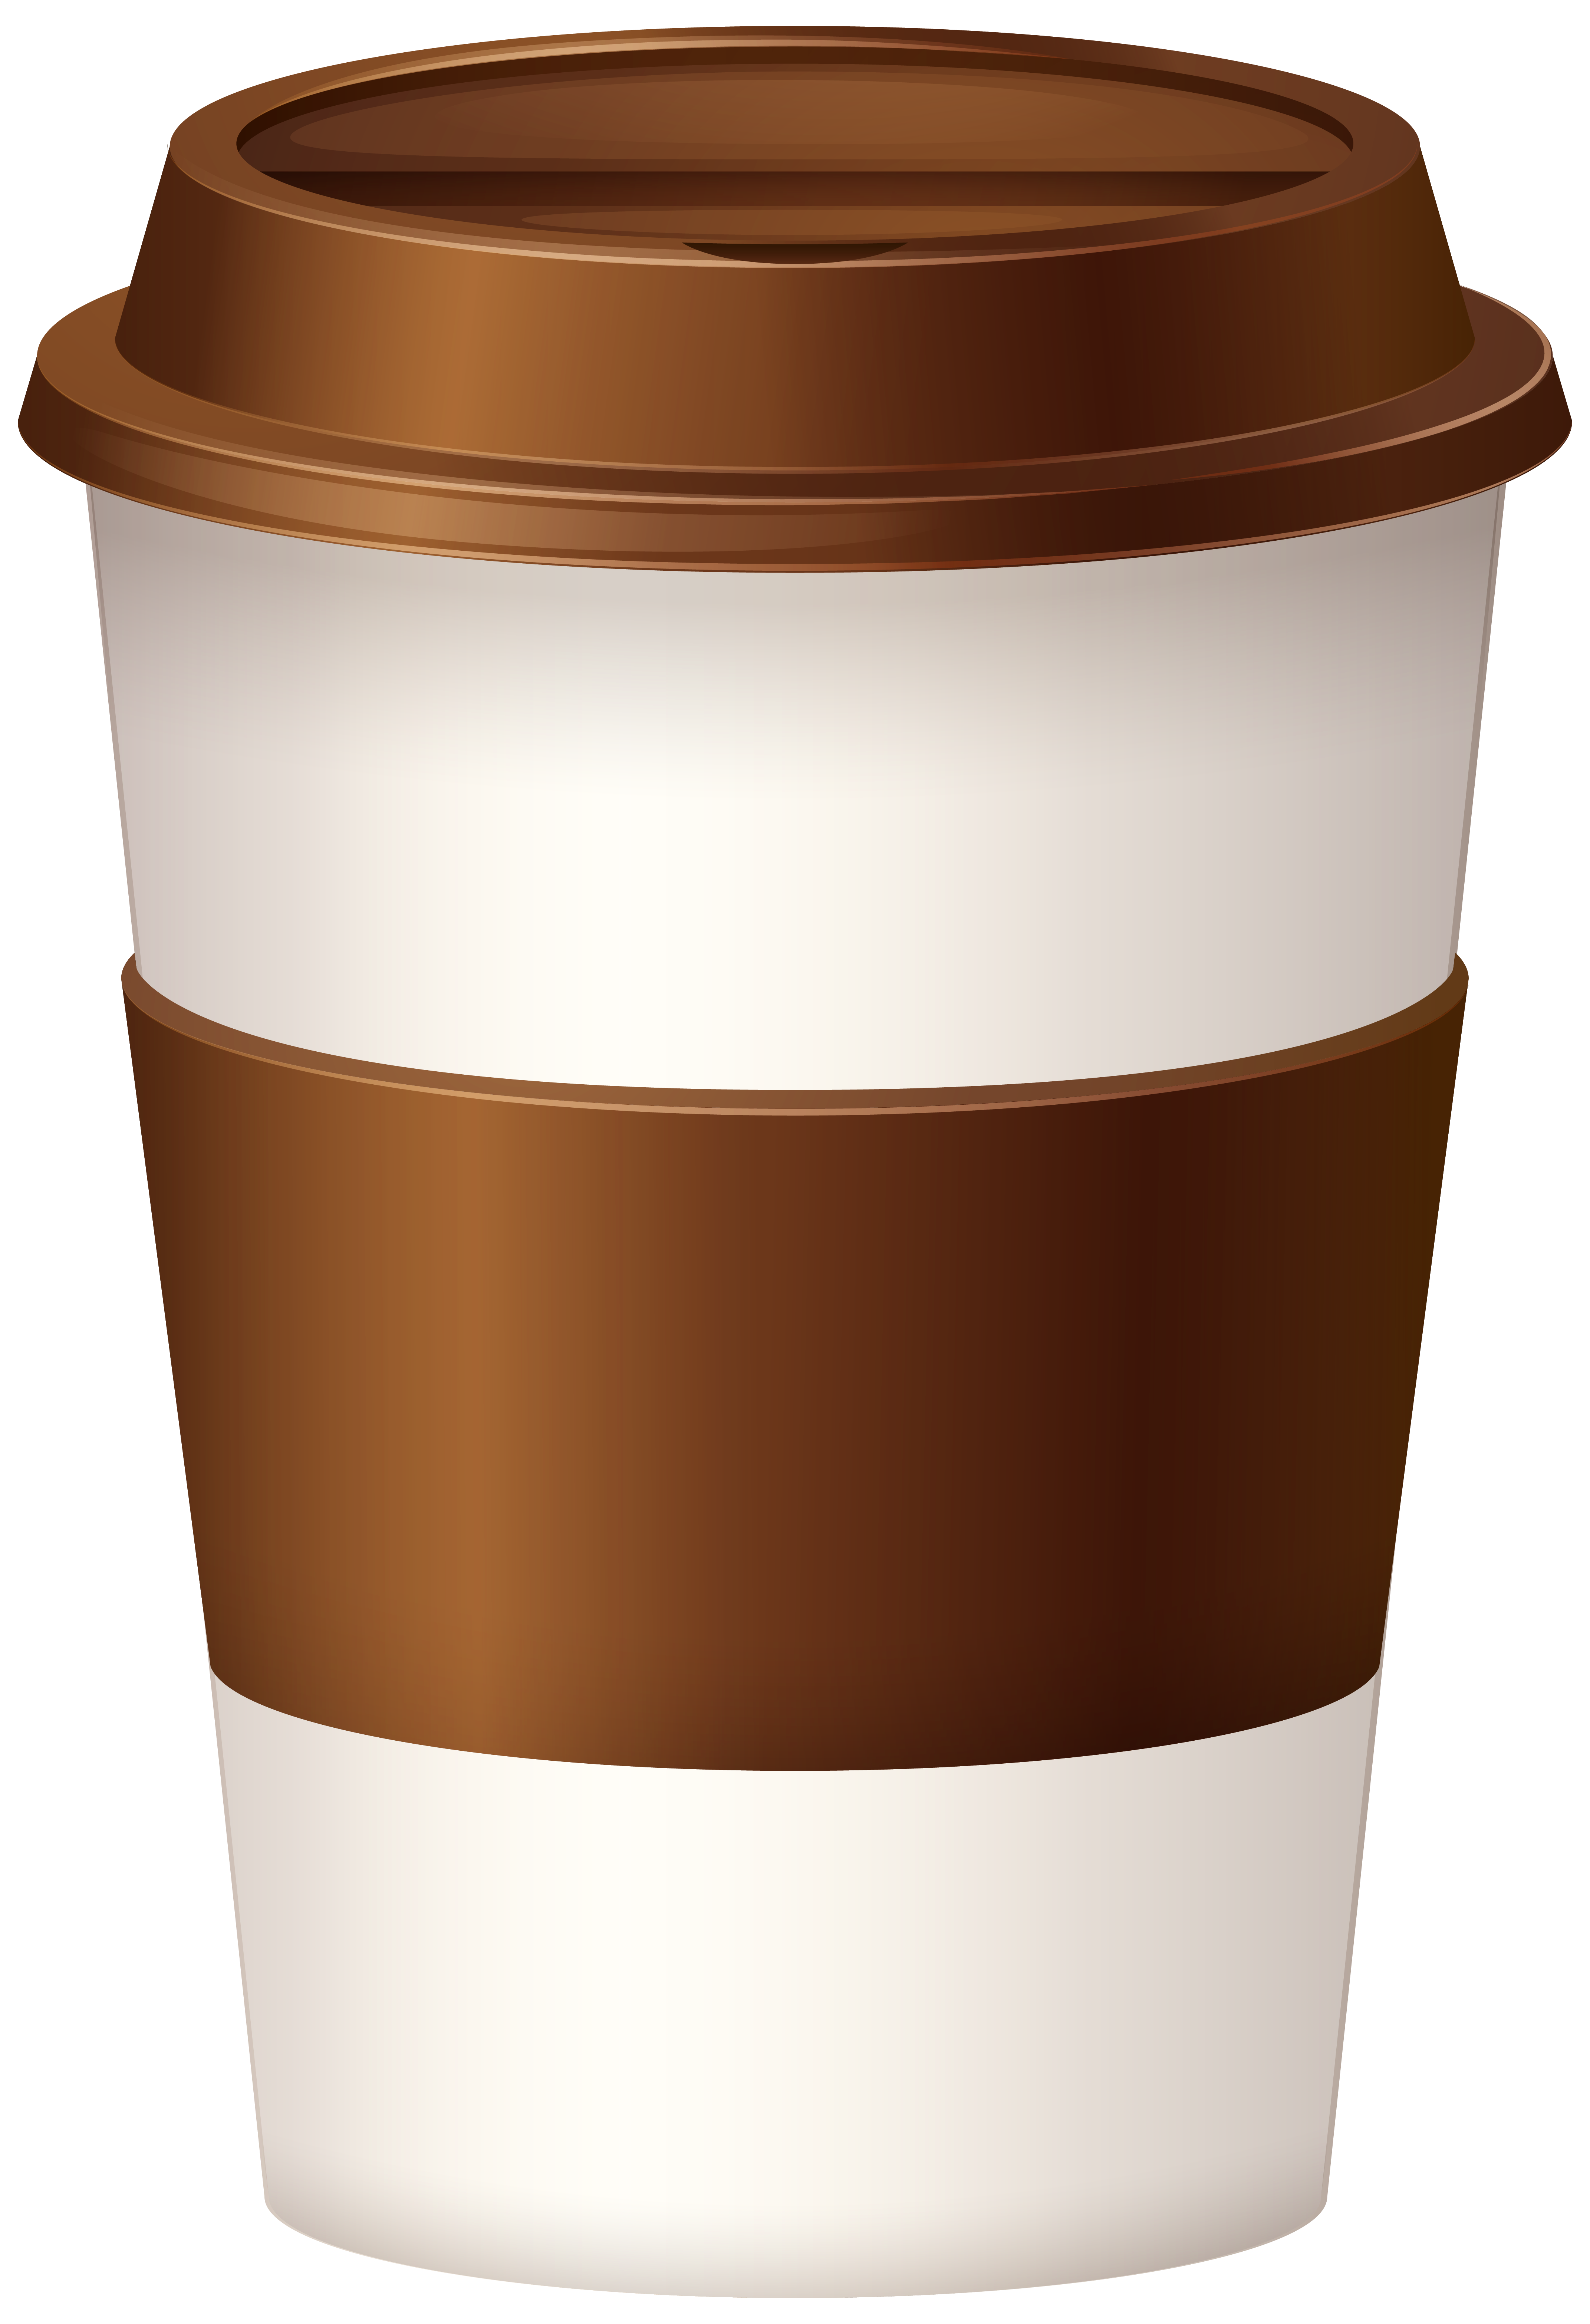 Free Coffee Mug Cliparts, Download Free Coffee Mug Cliparts png images